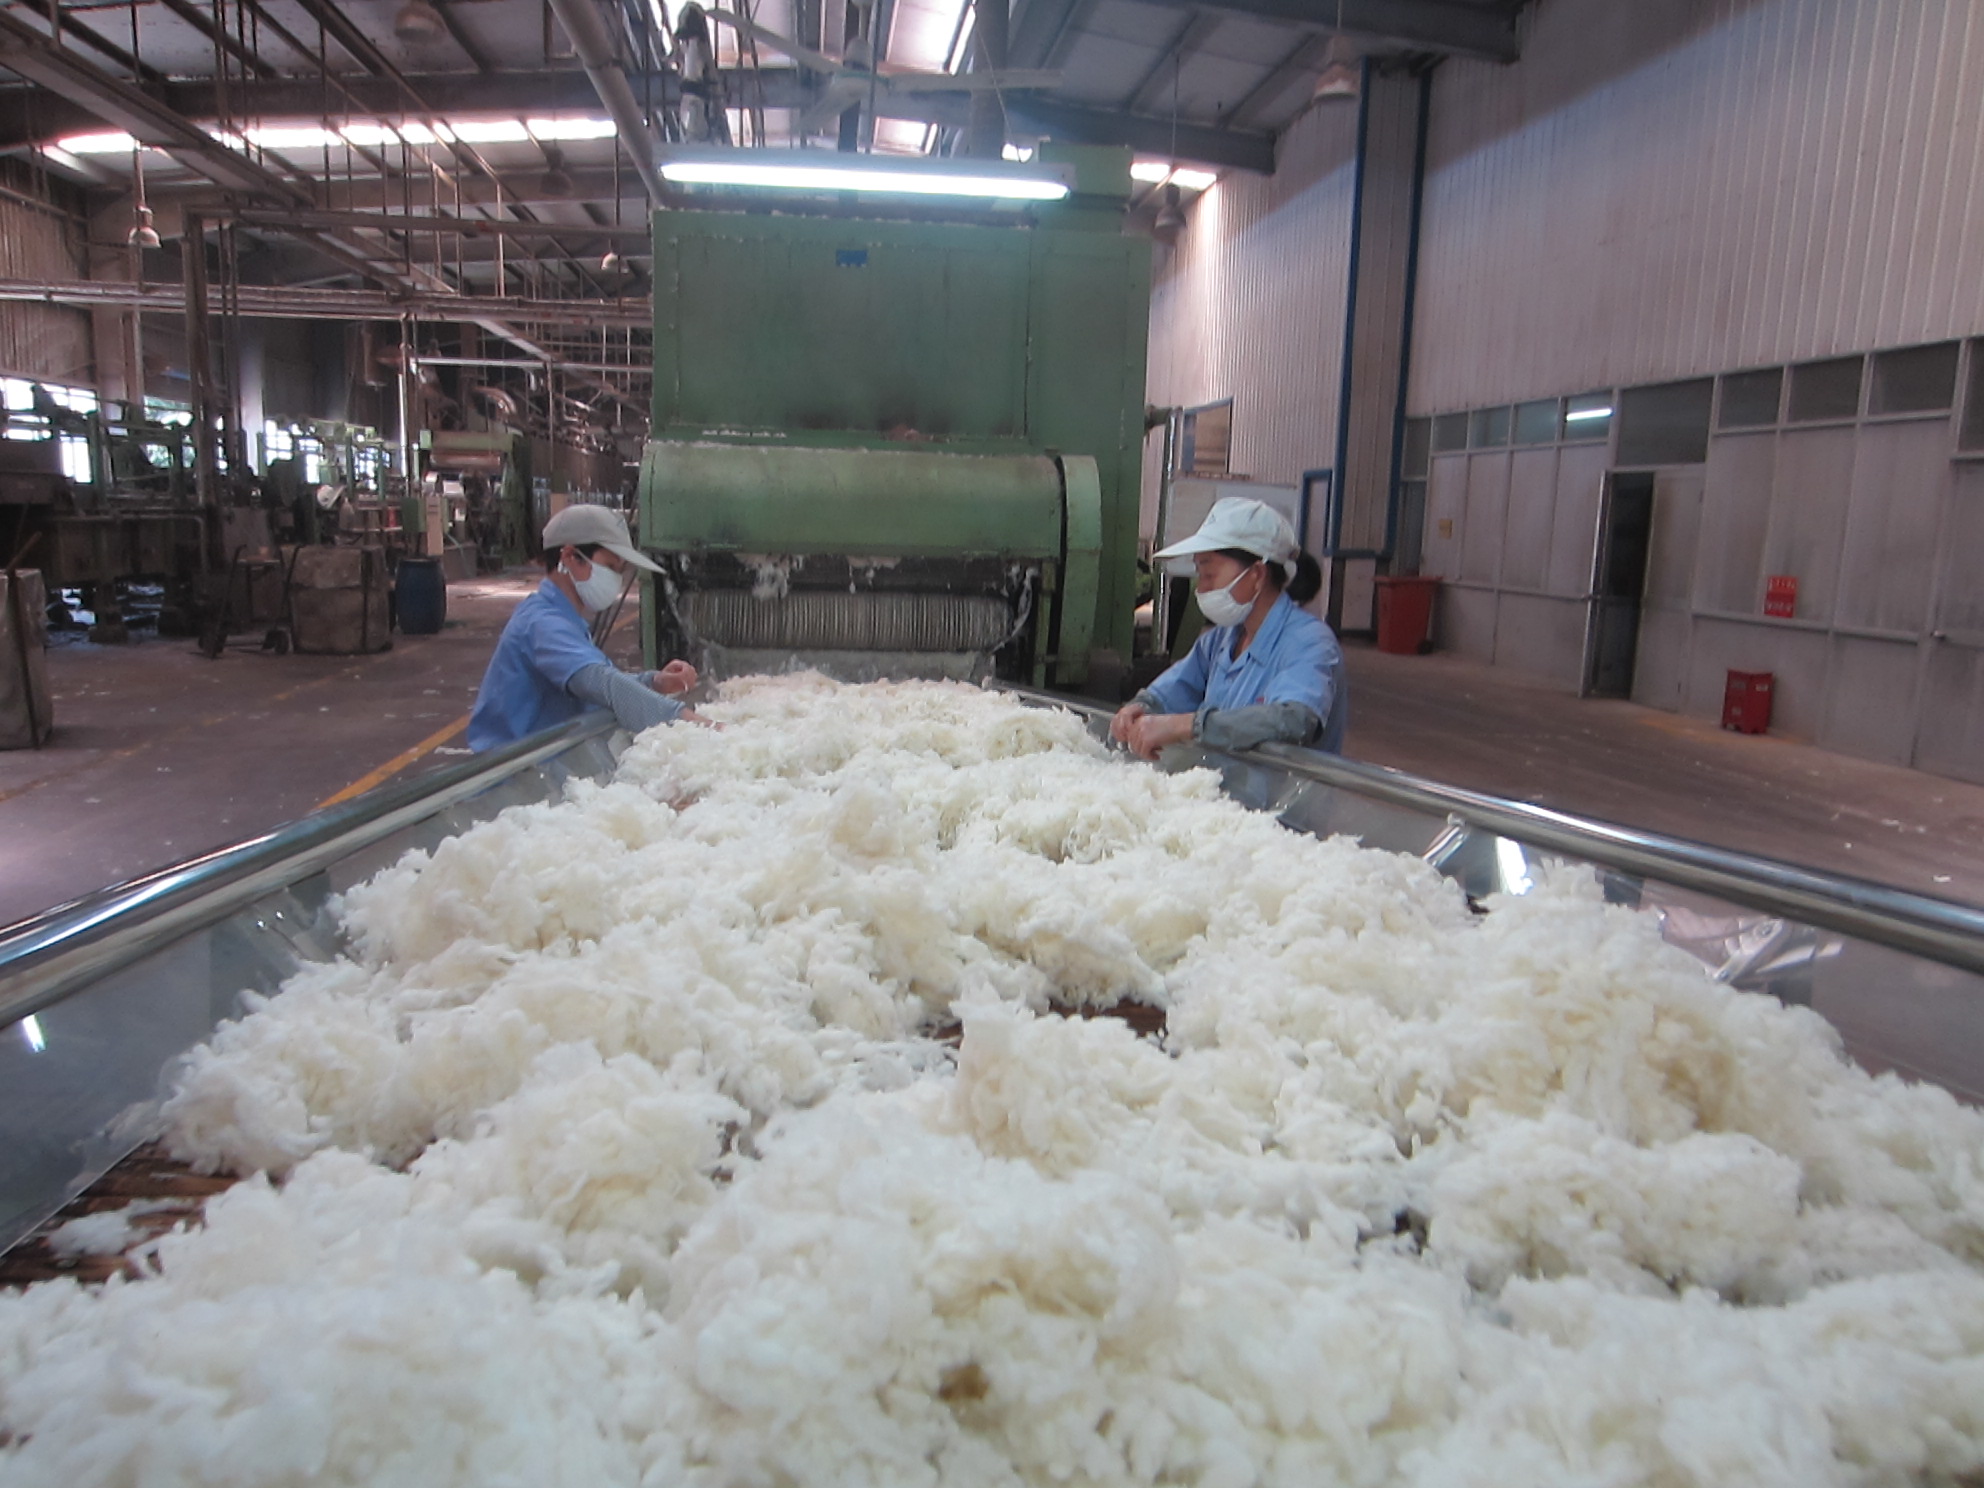 China lifts import quota on Australian wool by 5%